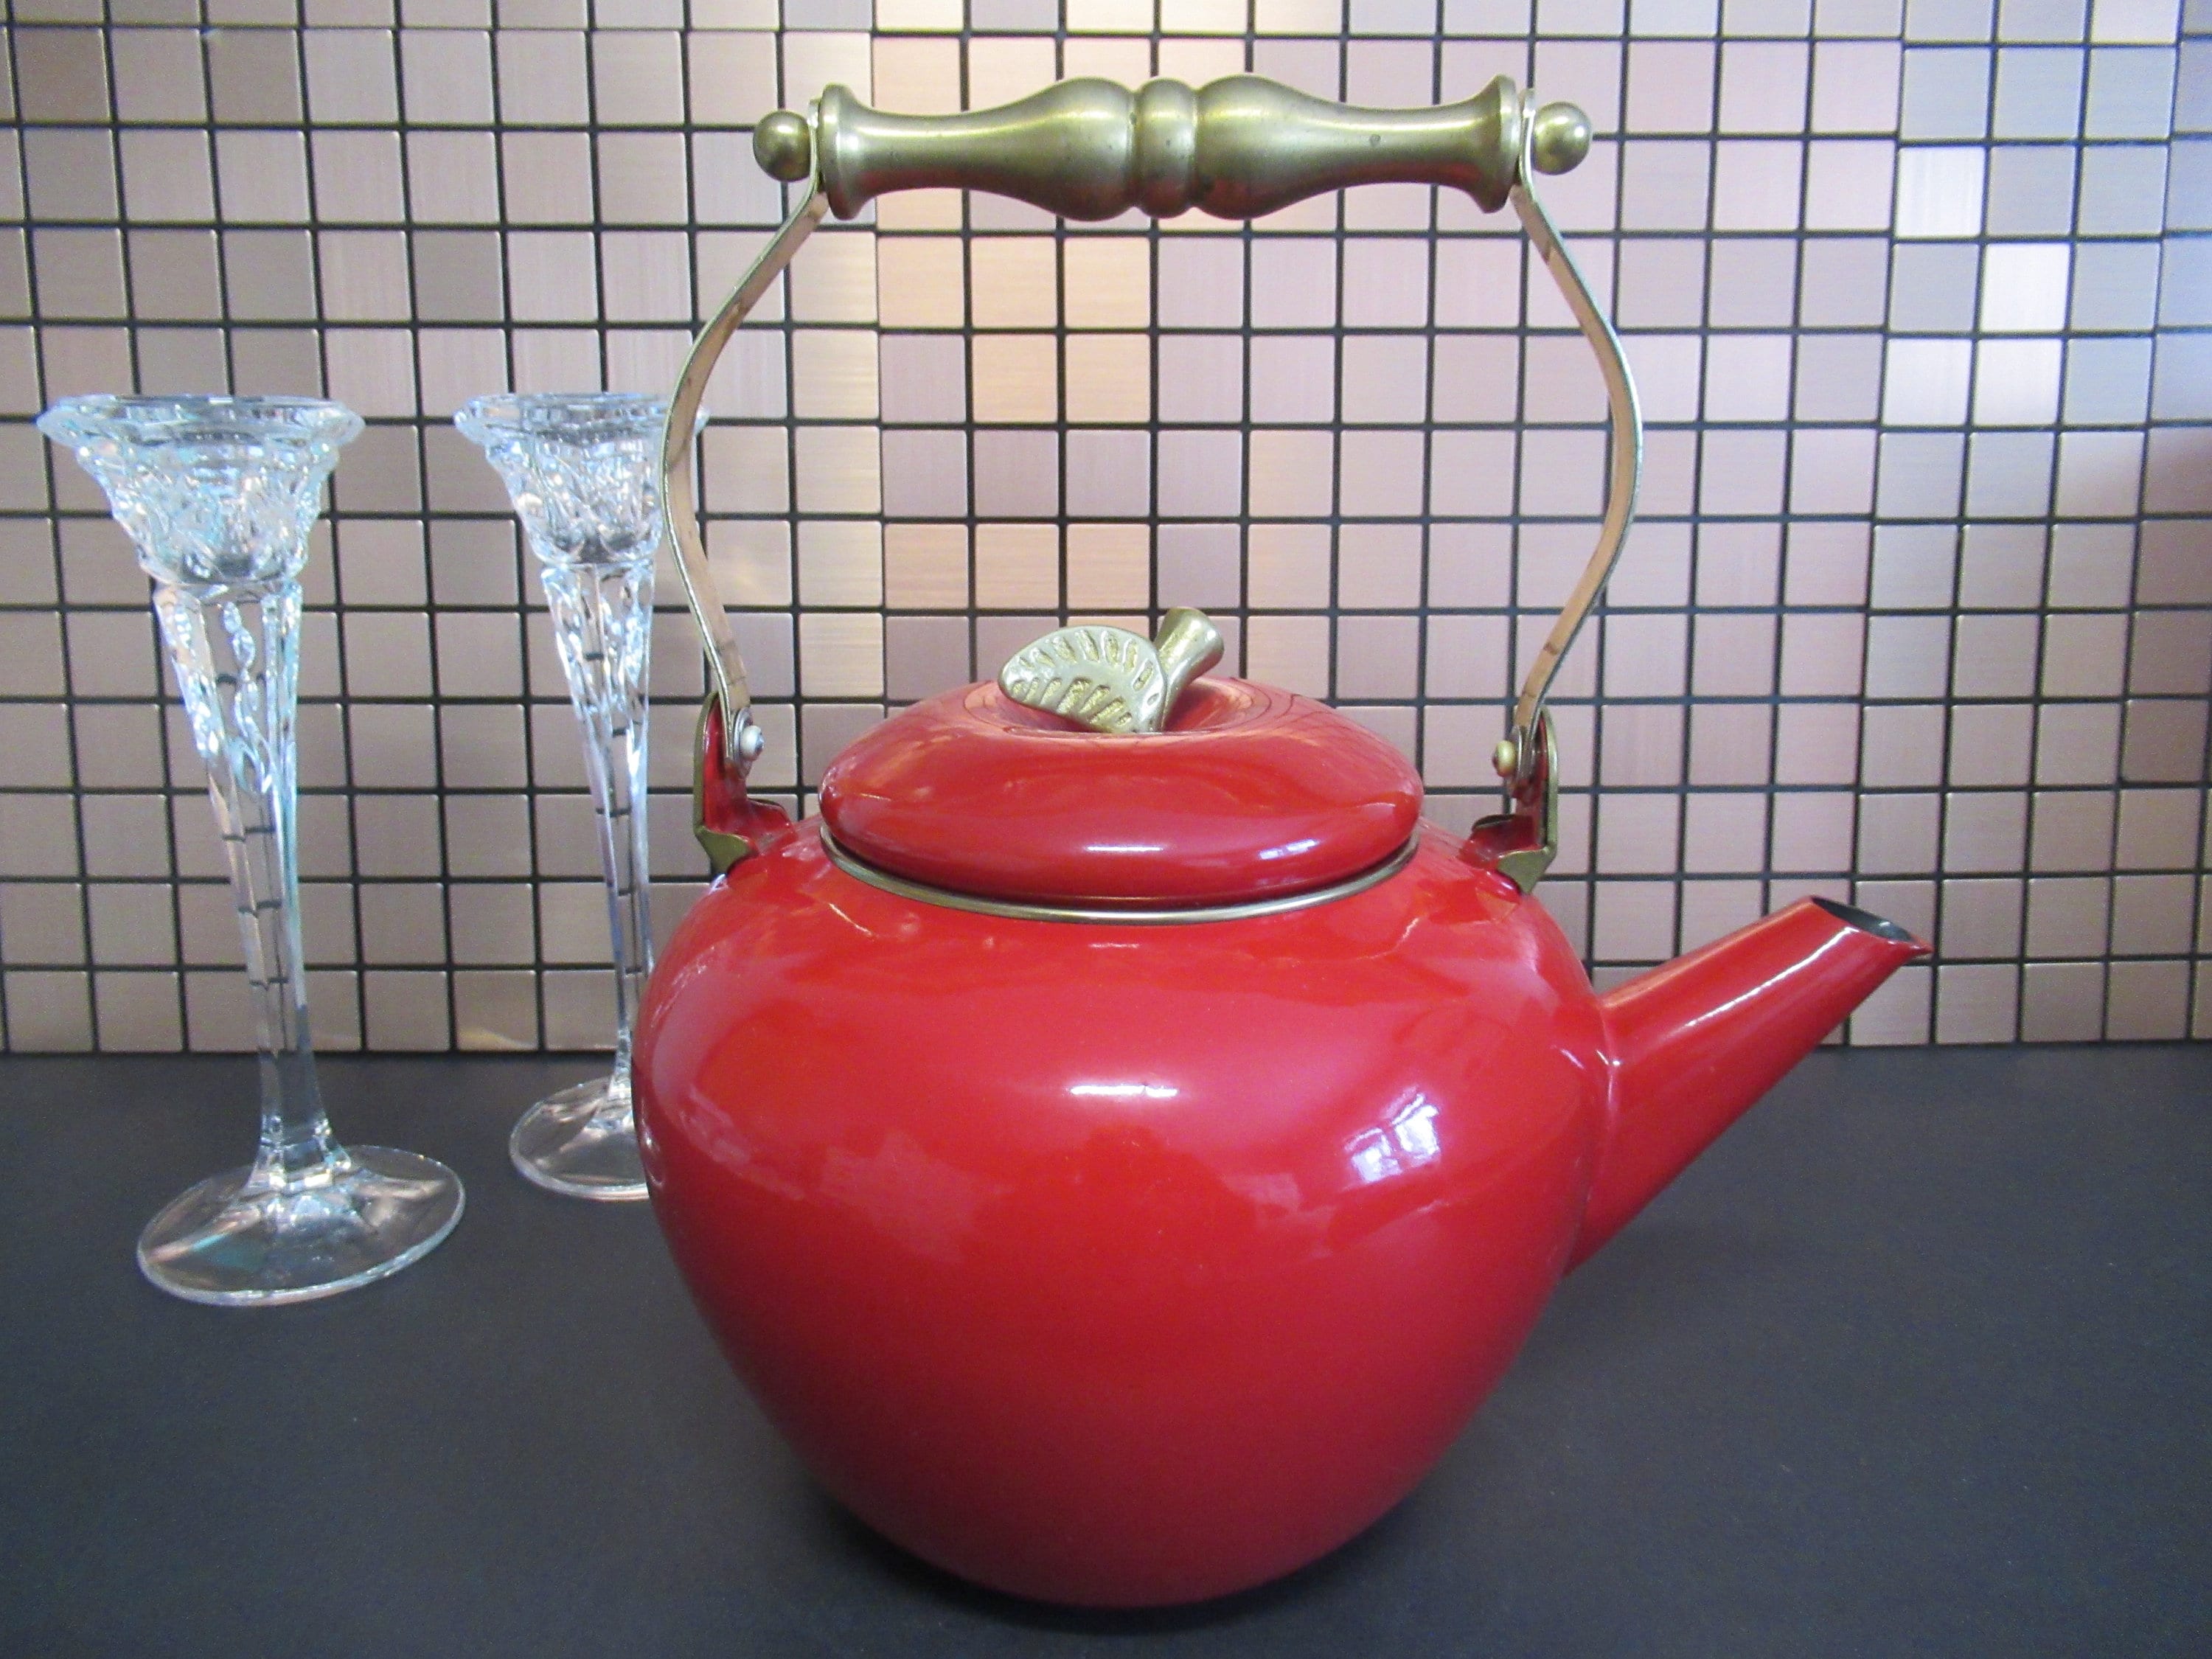 Whistling Tea Kettles, AIDEA 2 Quart Ceramic Tea Kettle for